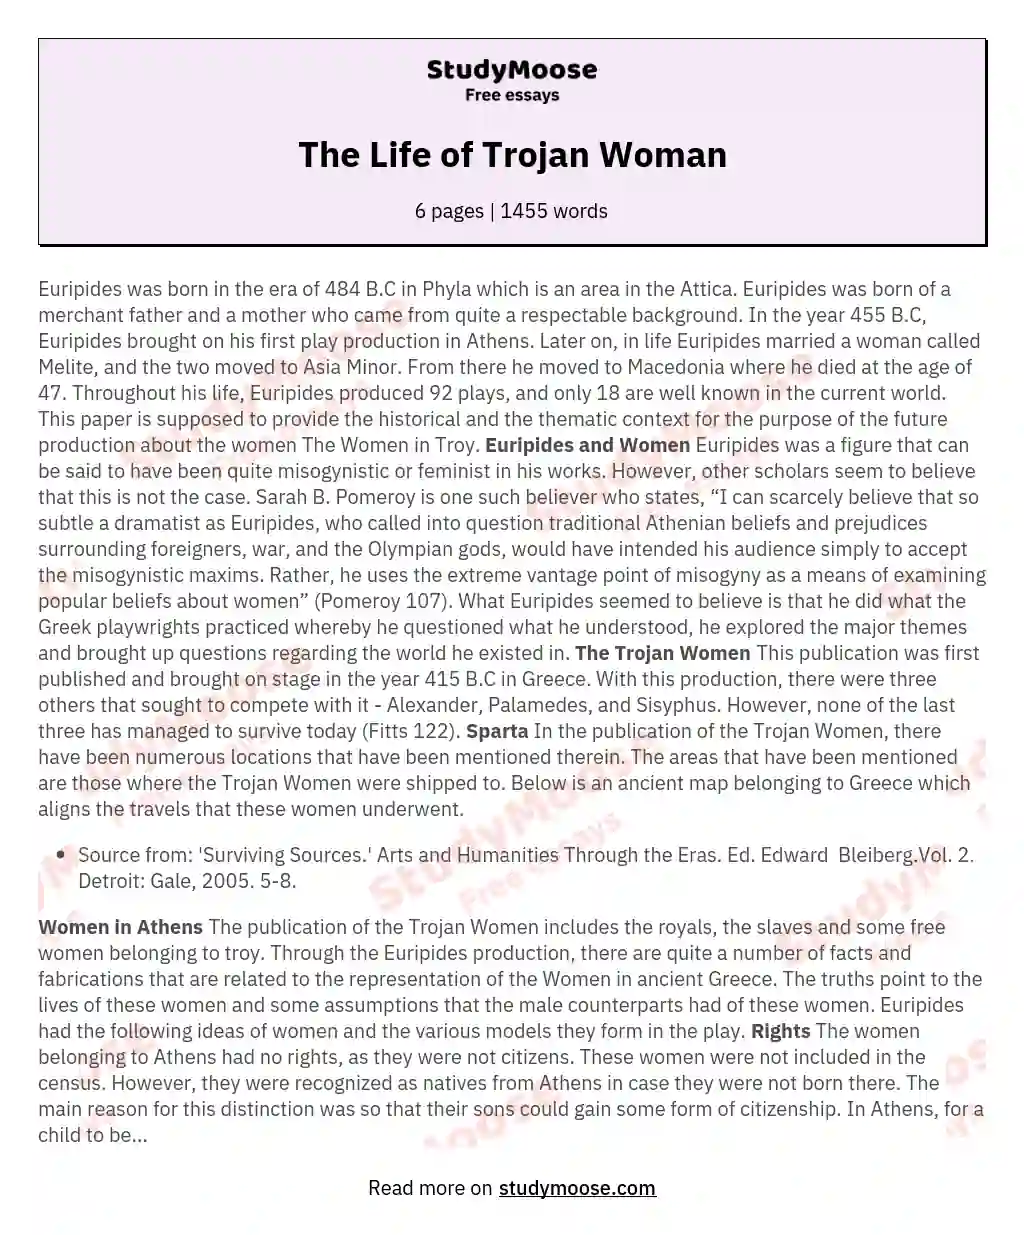 The Life of Trojan Woman essay